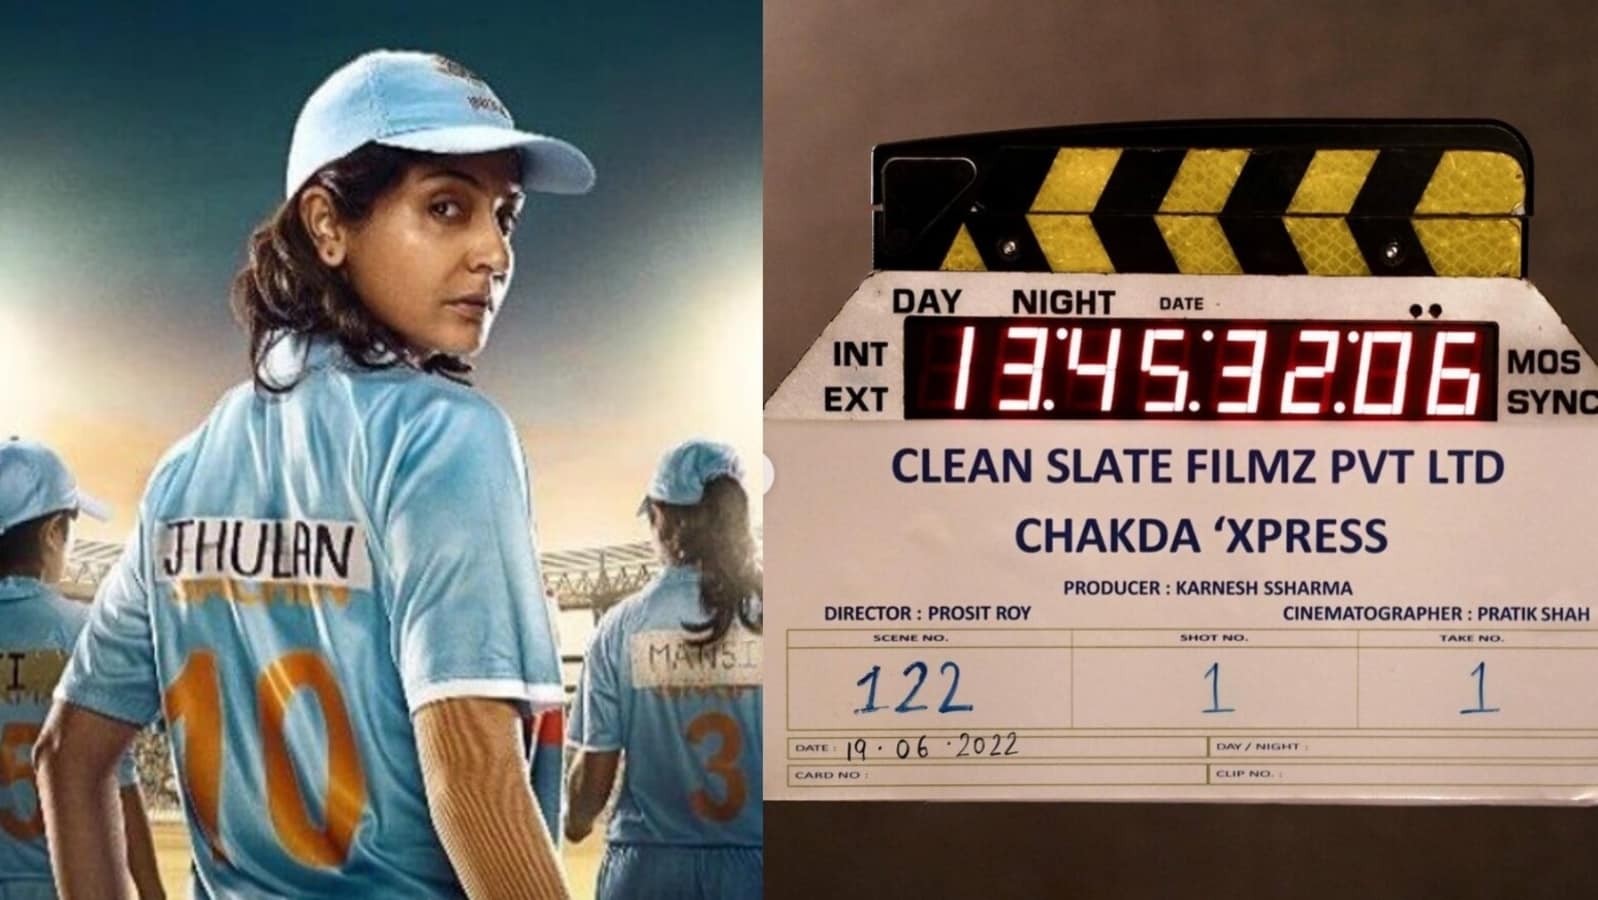 Anushka Sharma begins filming Chakda ‘Xpress, Virat Kohli reacts to video from set. Watch